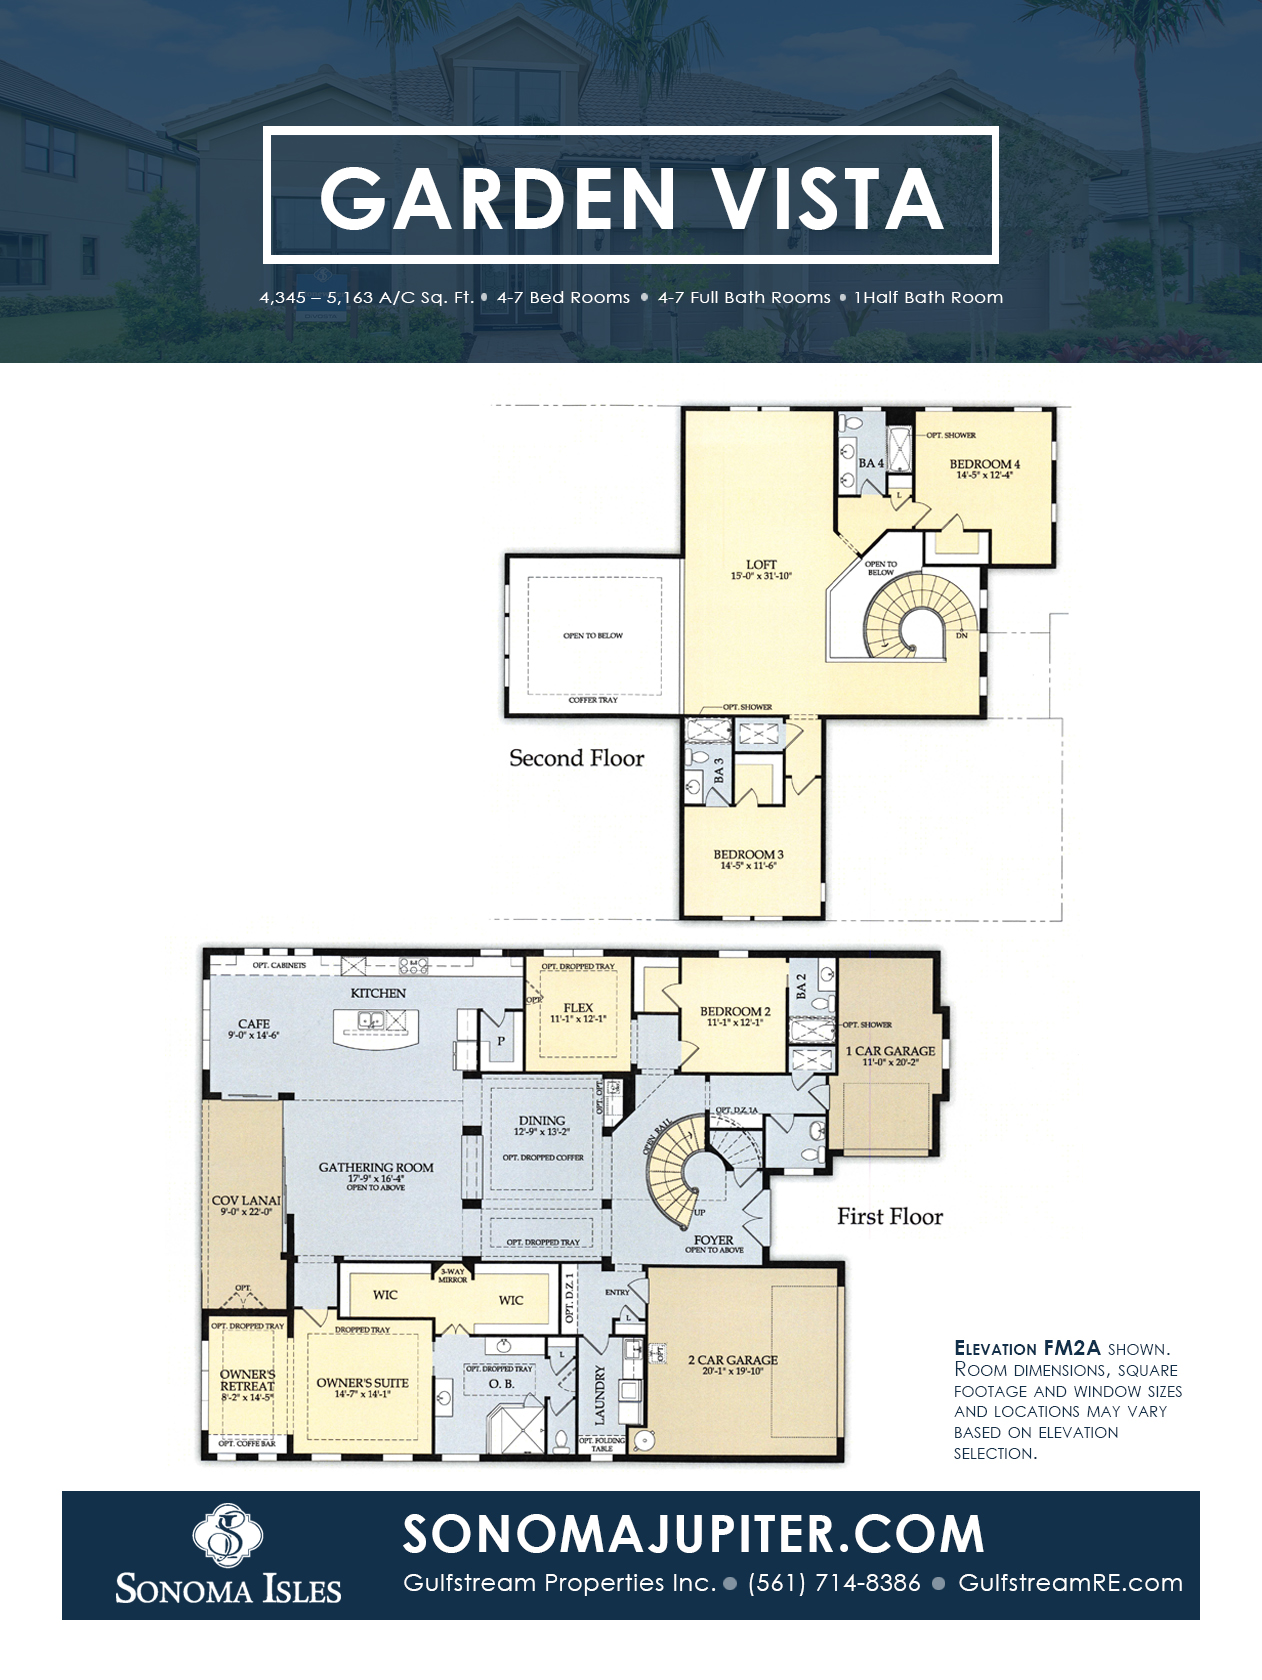 Sonoma Isles Garden Vista Floor Plan New Construction